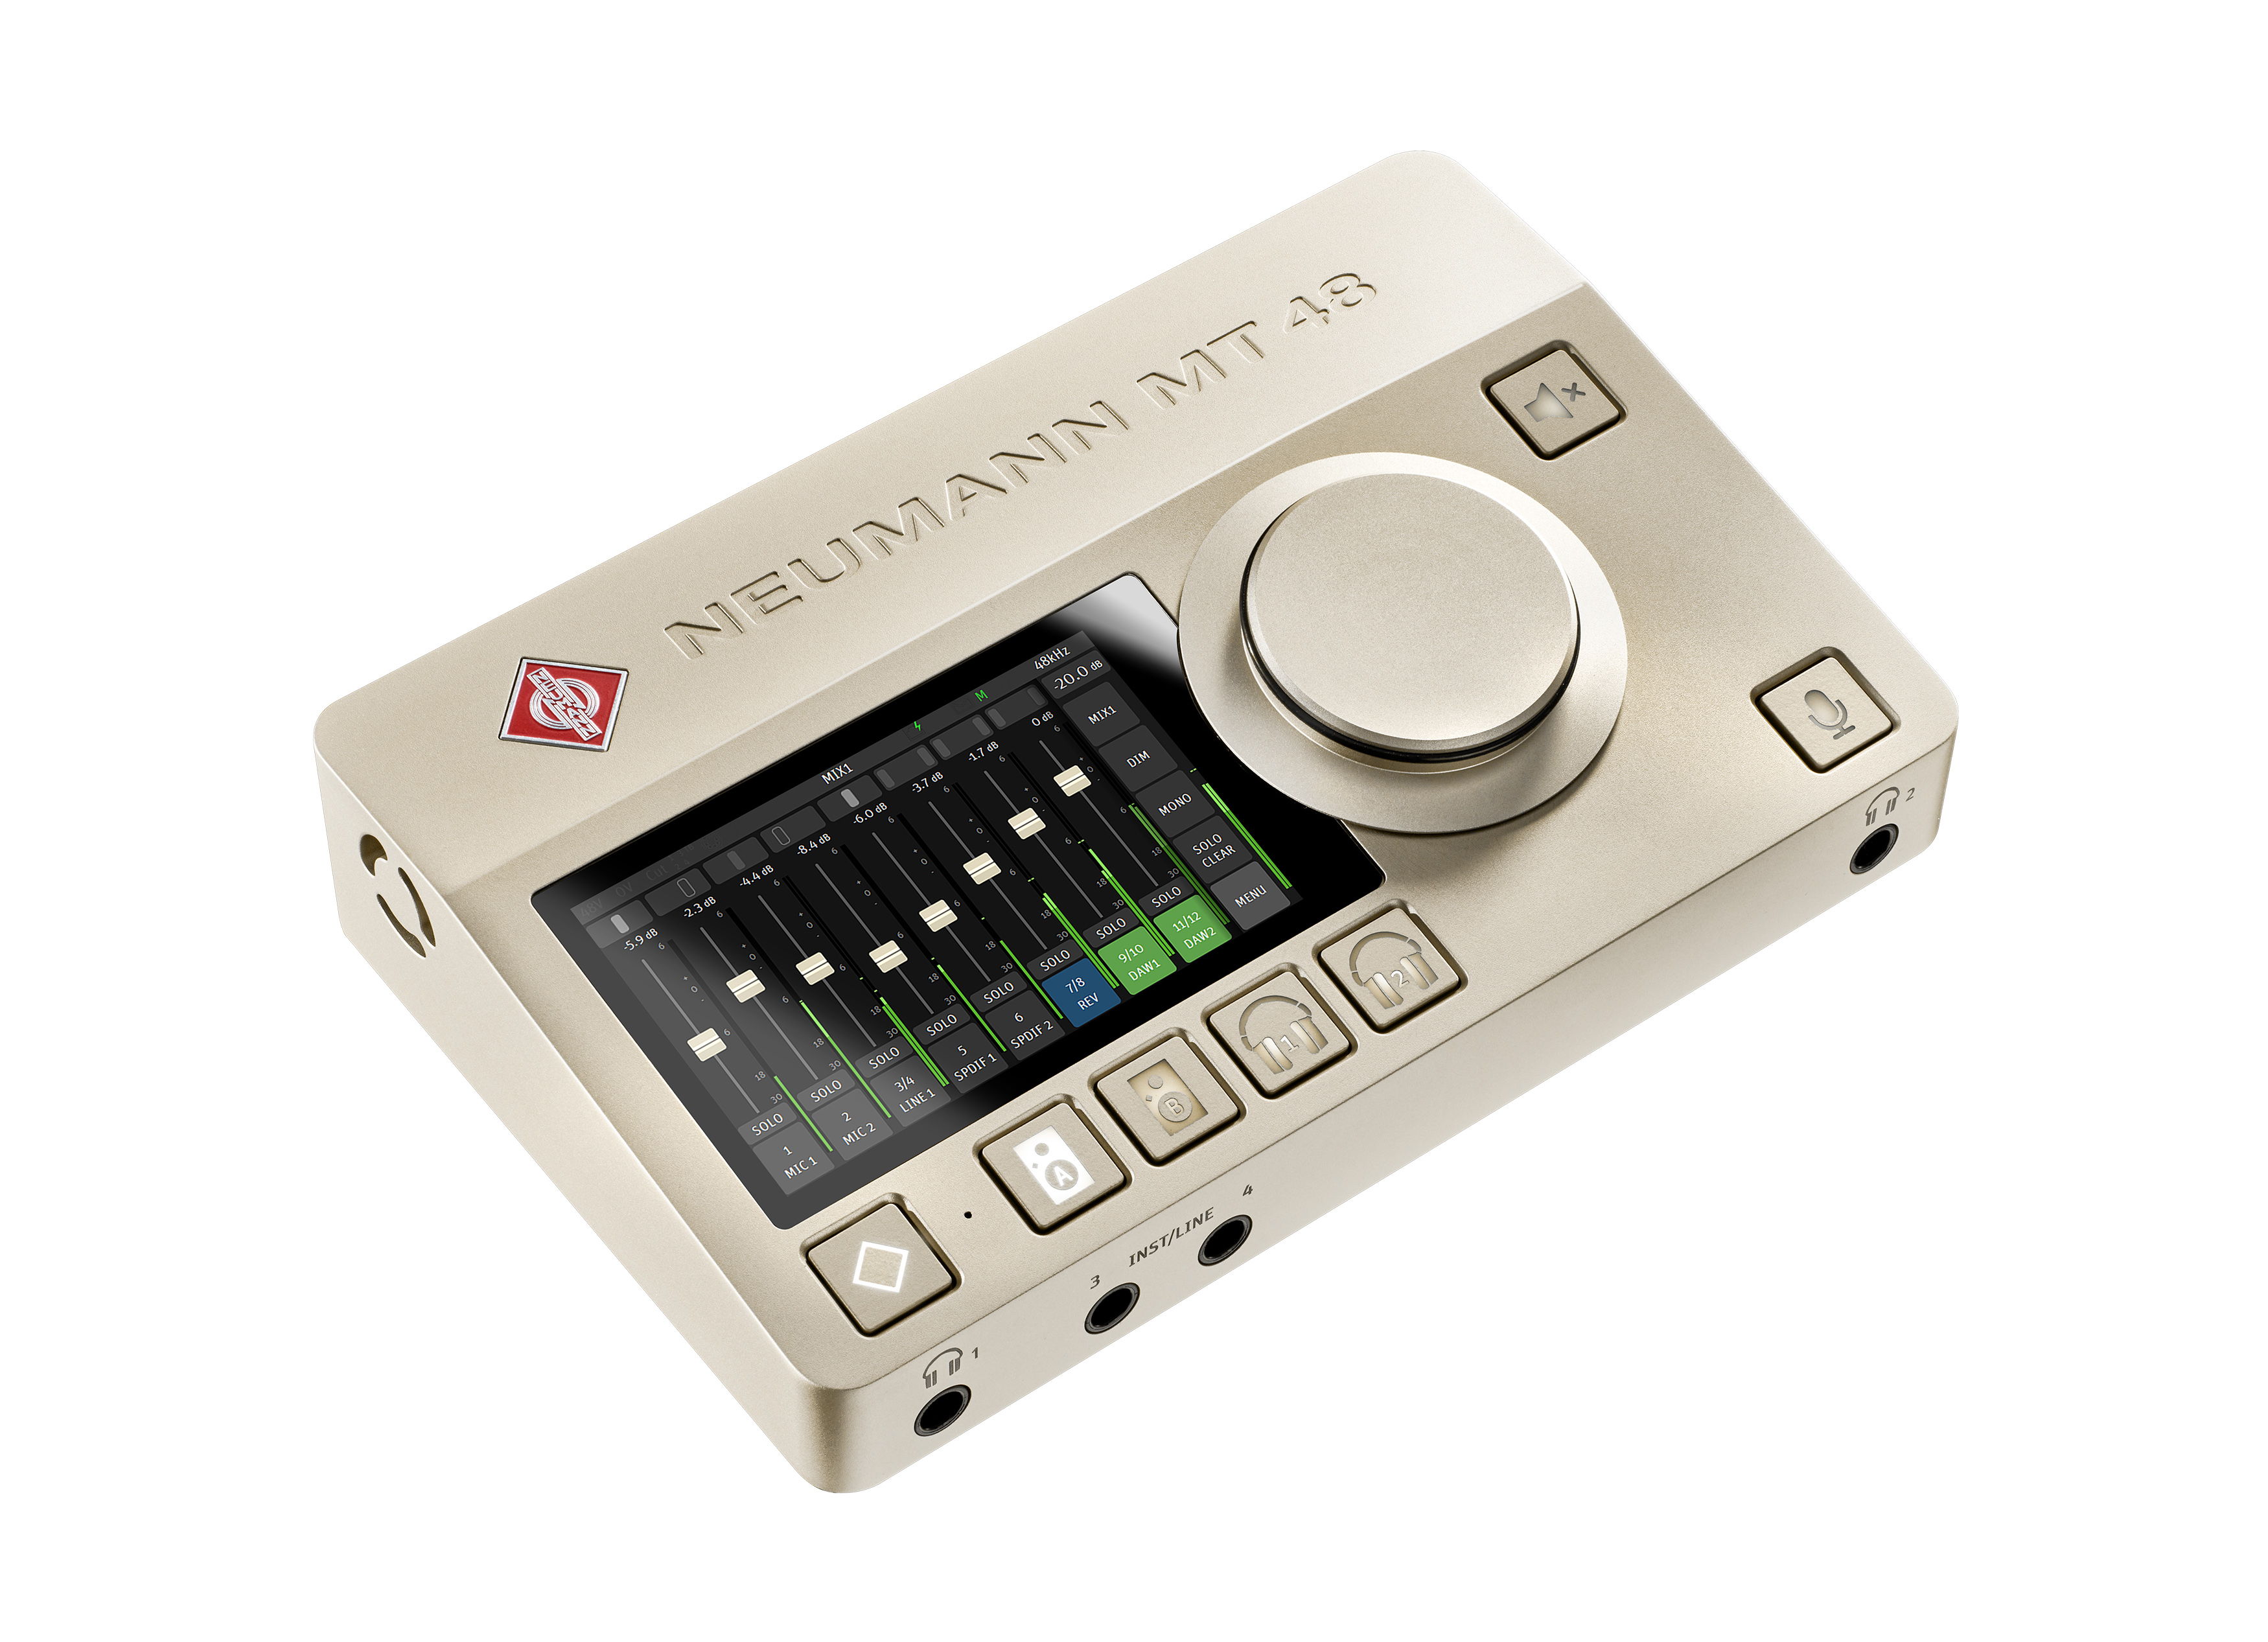 The Neumann MT 48 audio interface